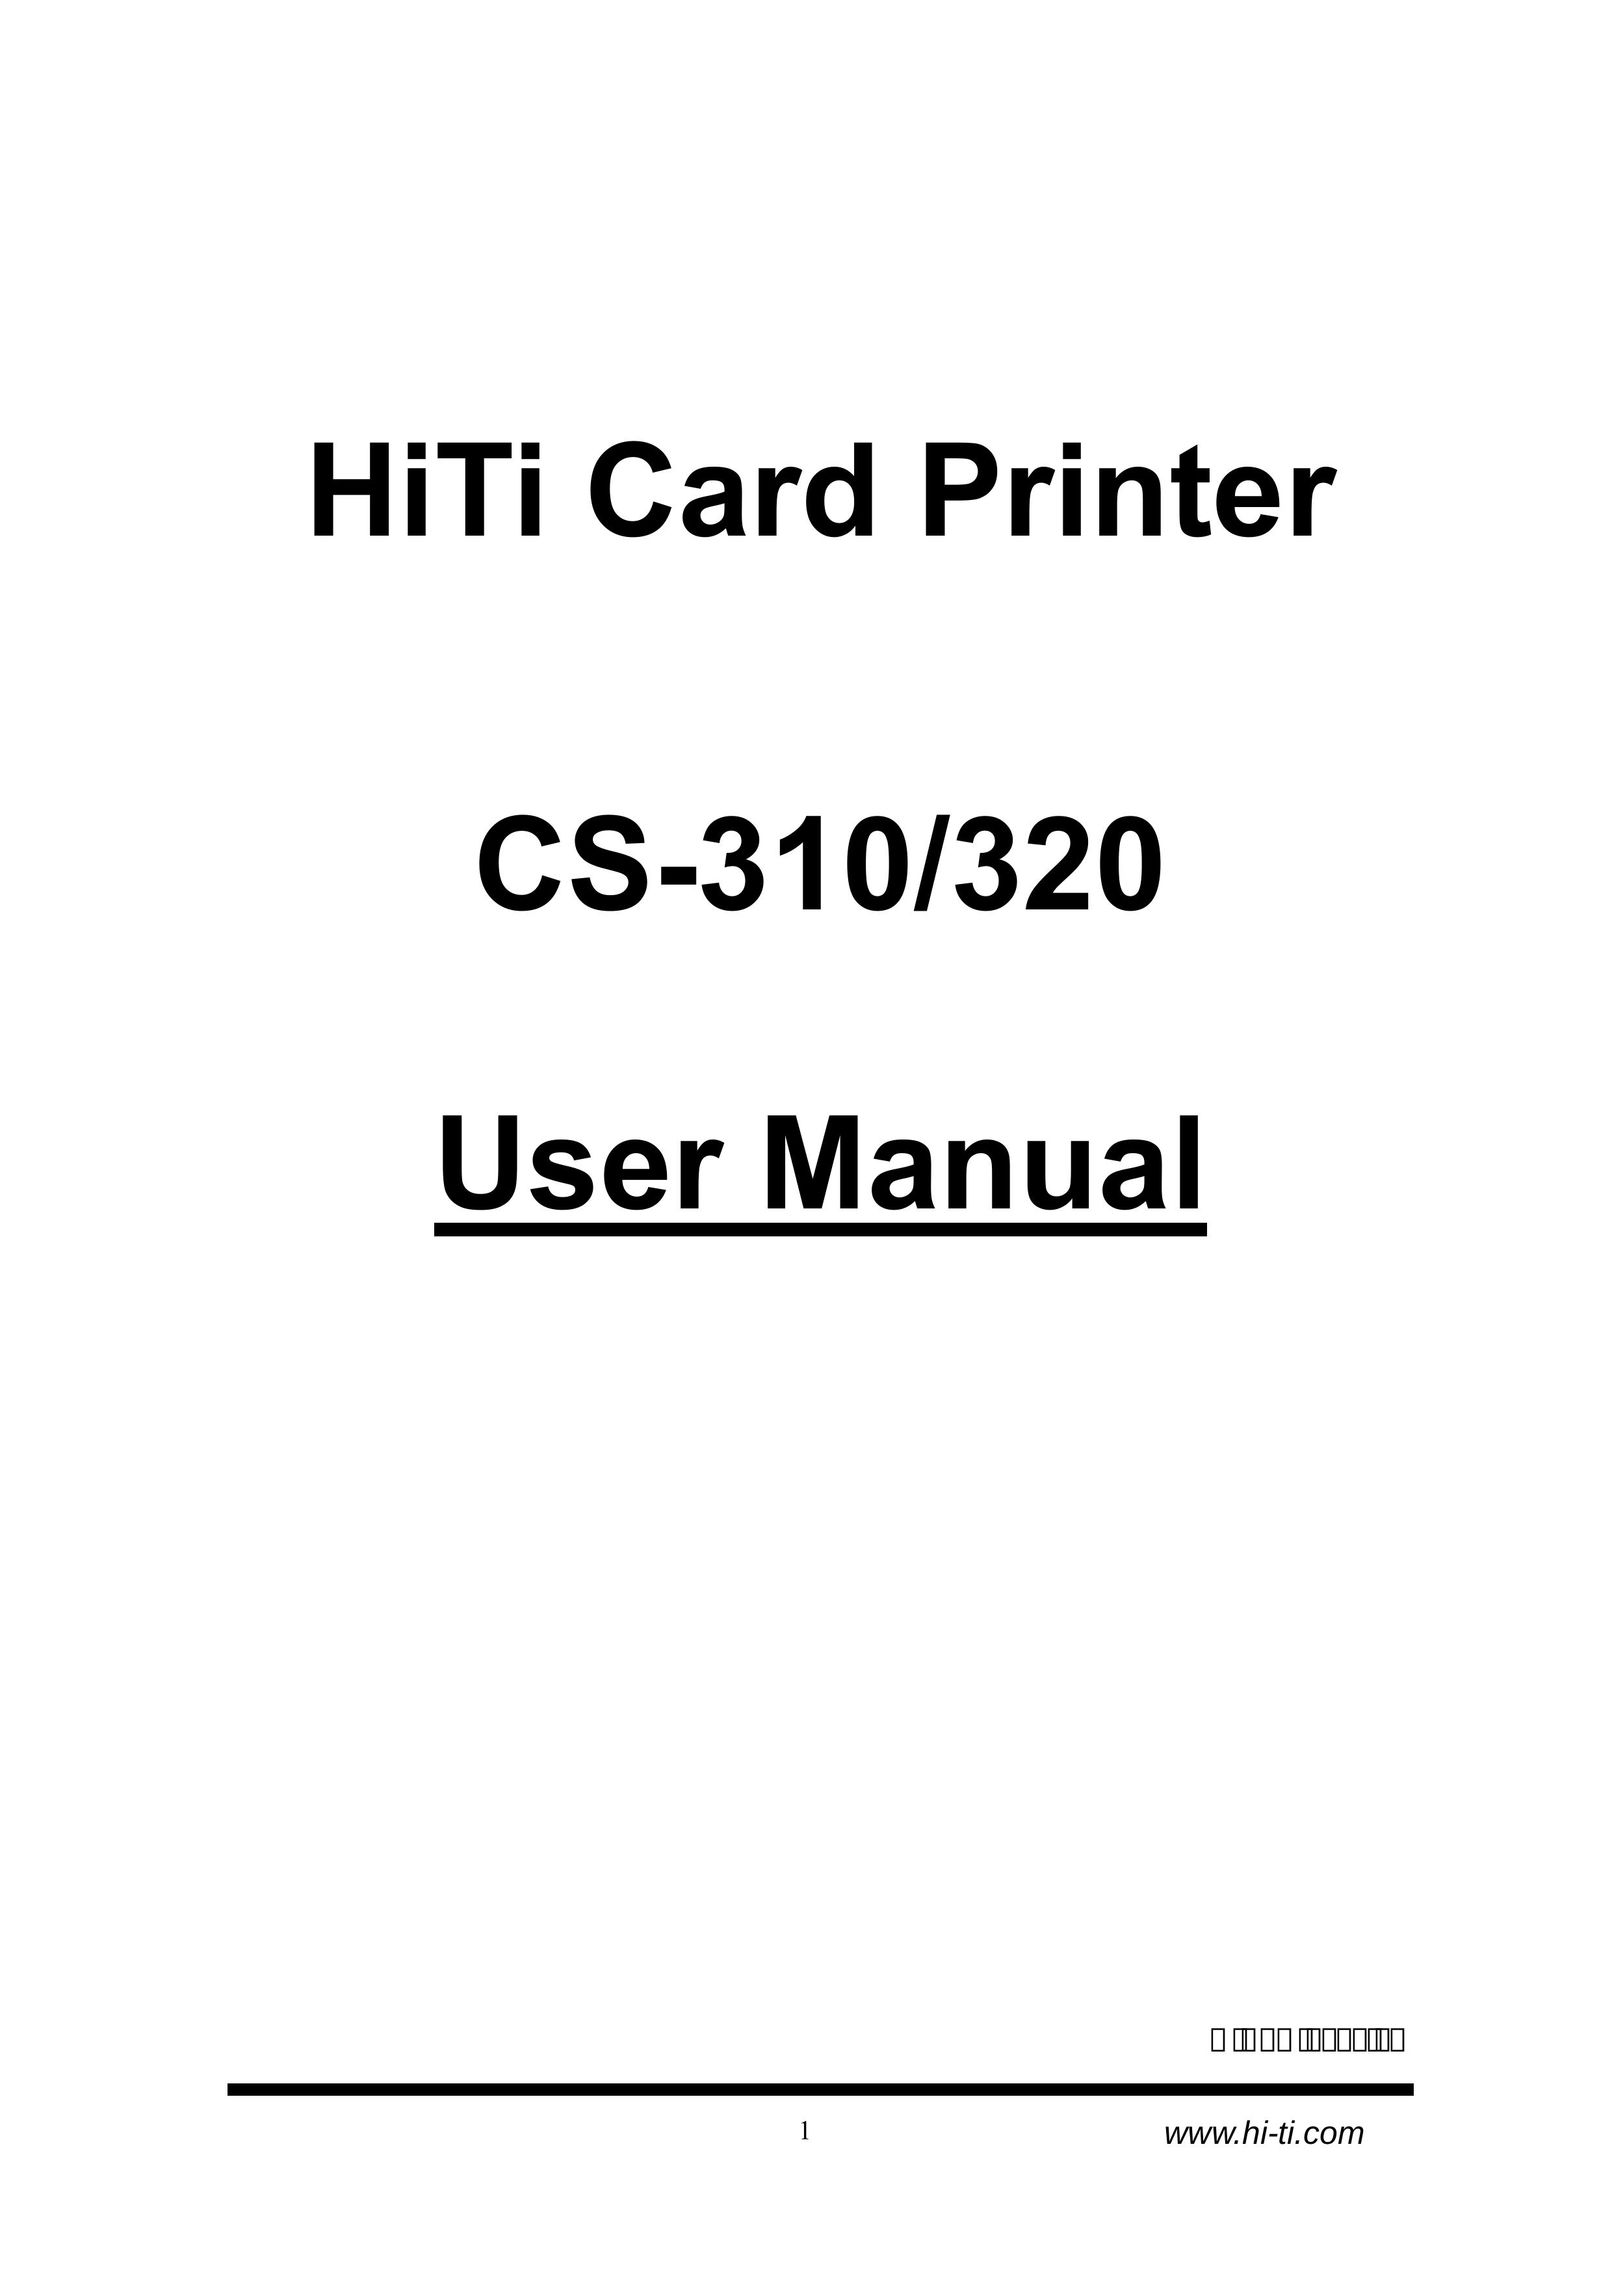 Hi-Touch Imaging Technologies CS-310 Printer User Manual